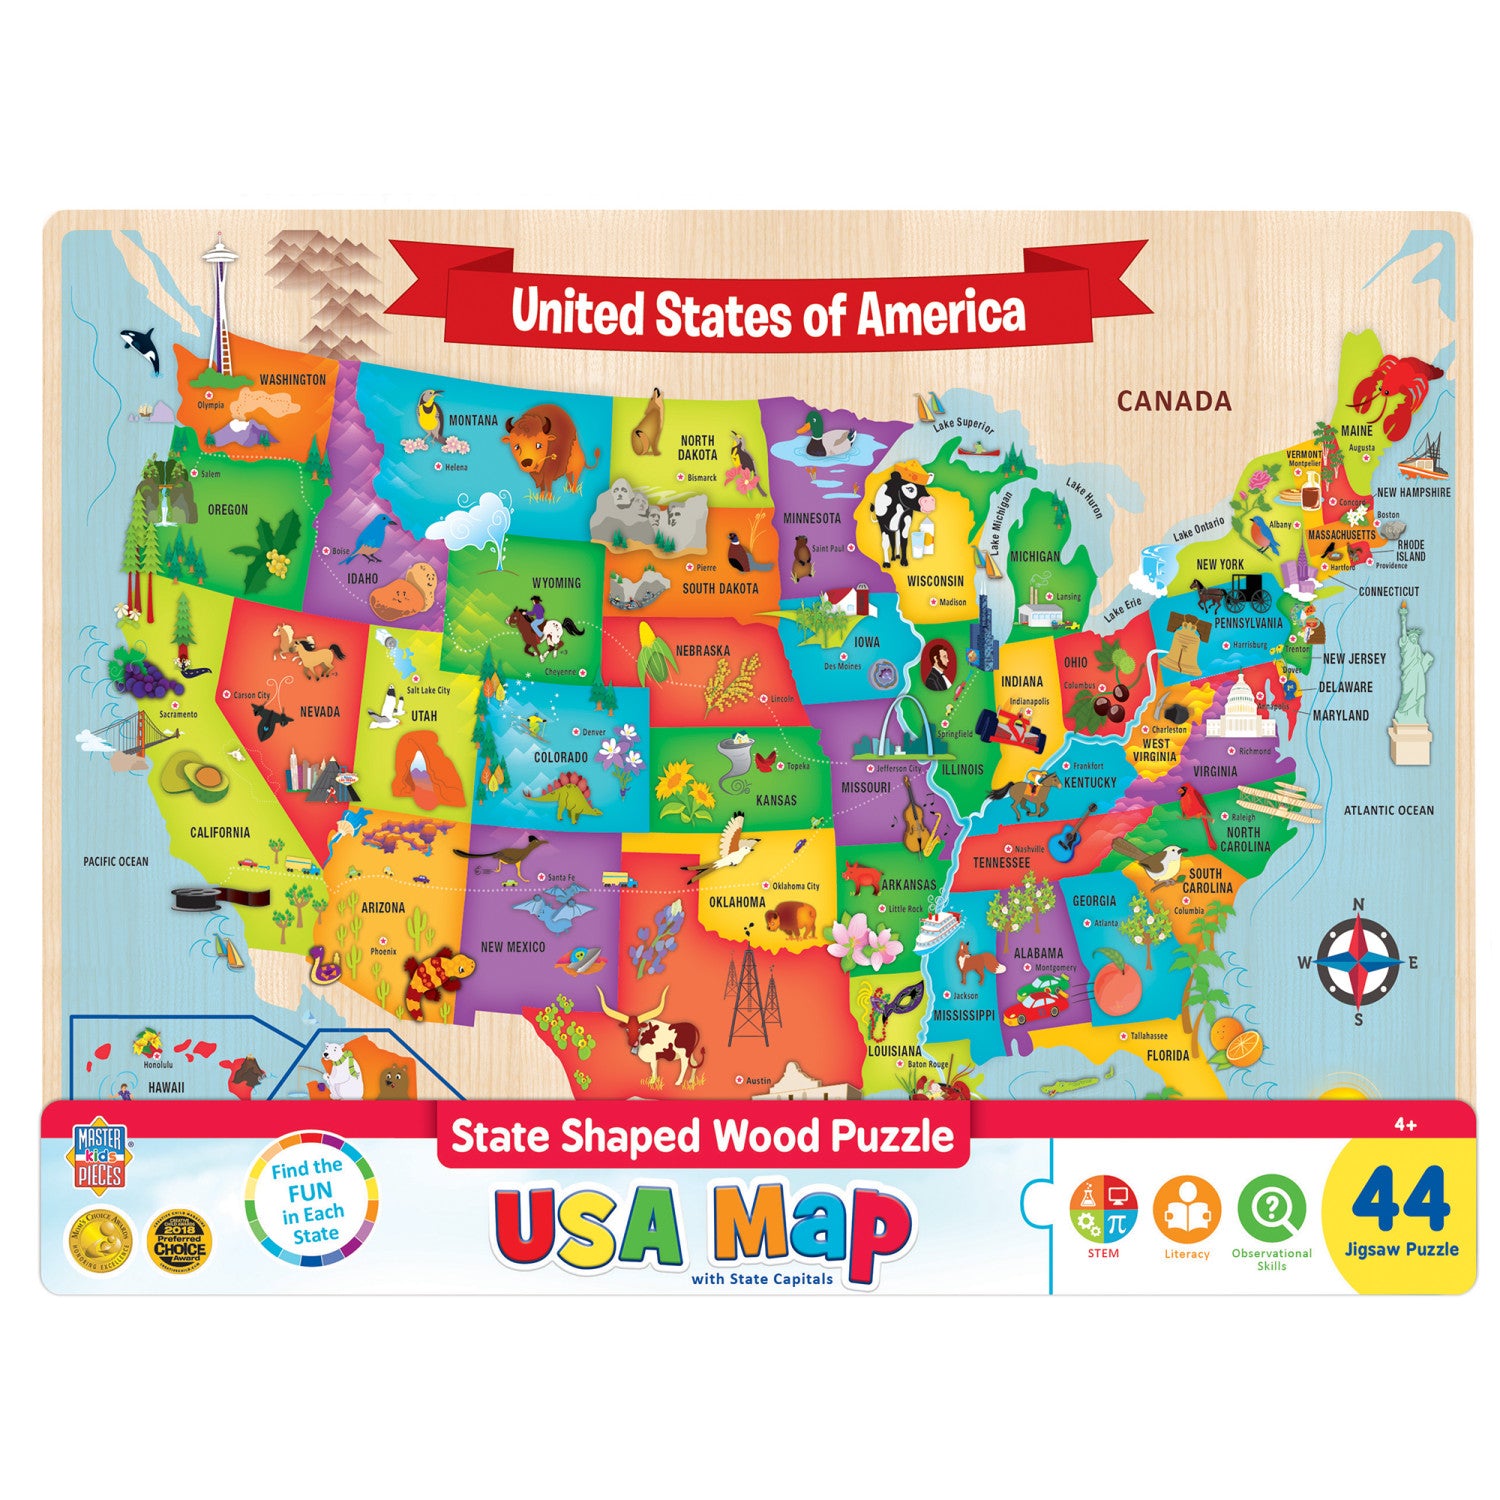 USA Map - 44 Piece Wood Jigsaw Puzzle